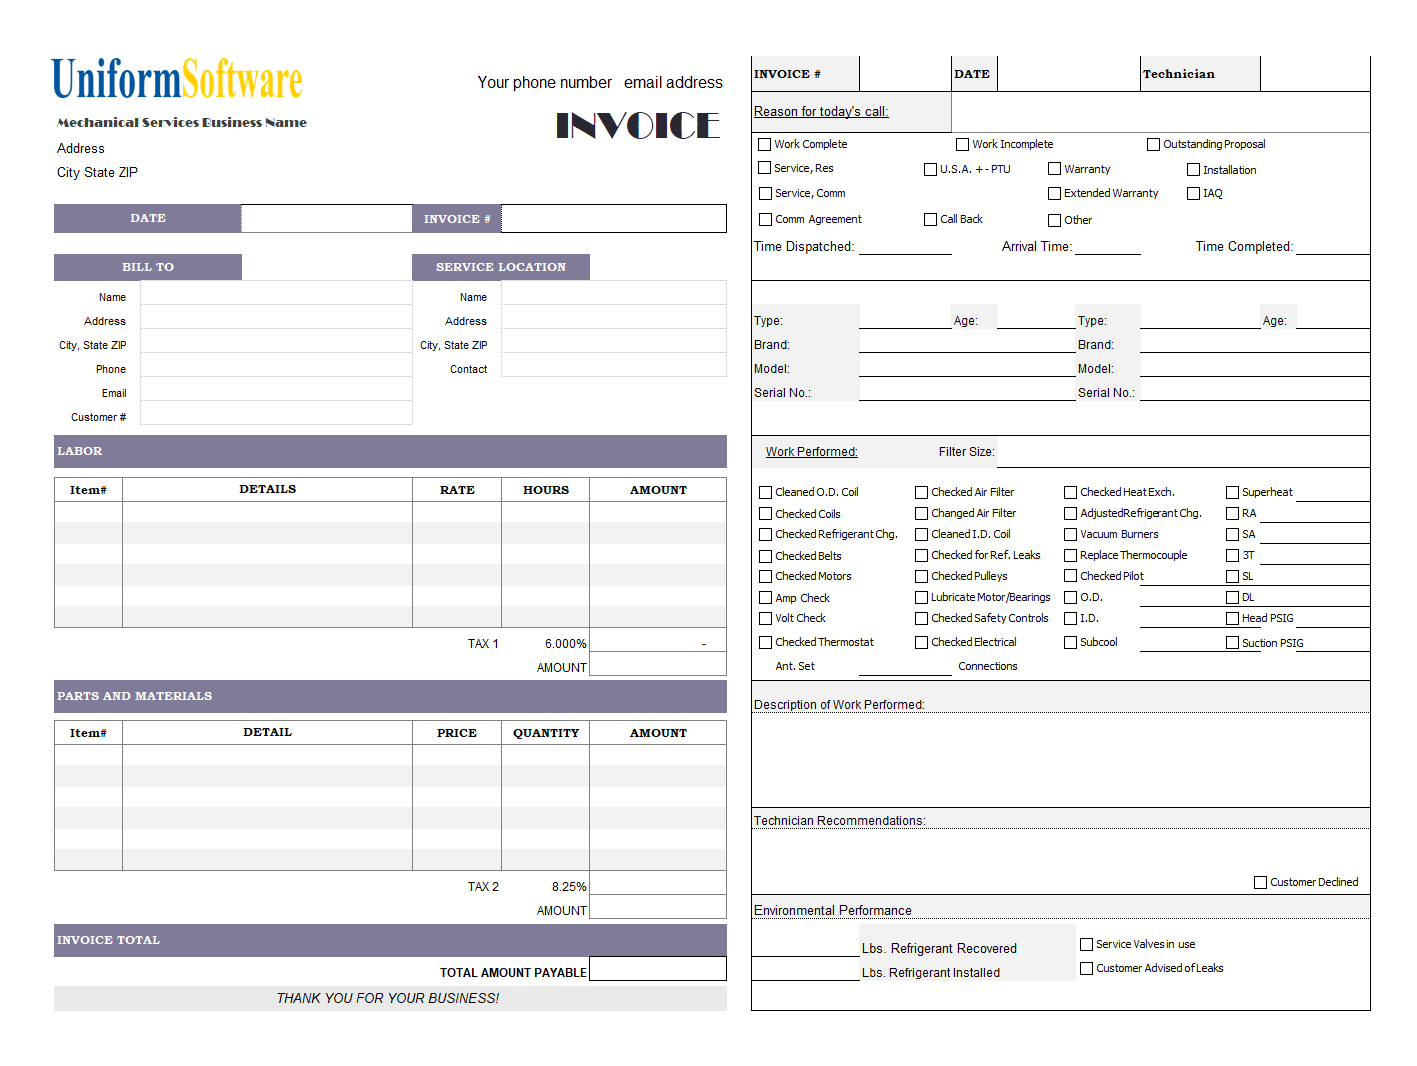 HVAC Service Invoice (IMFE Edition)